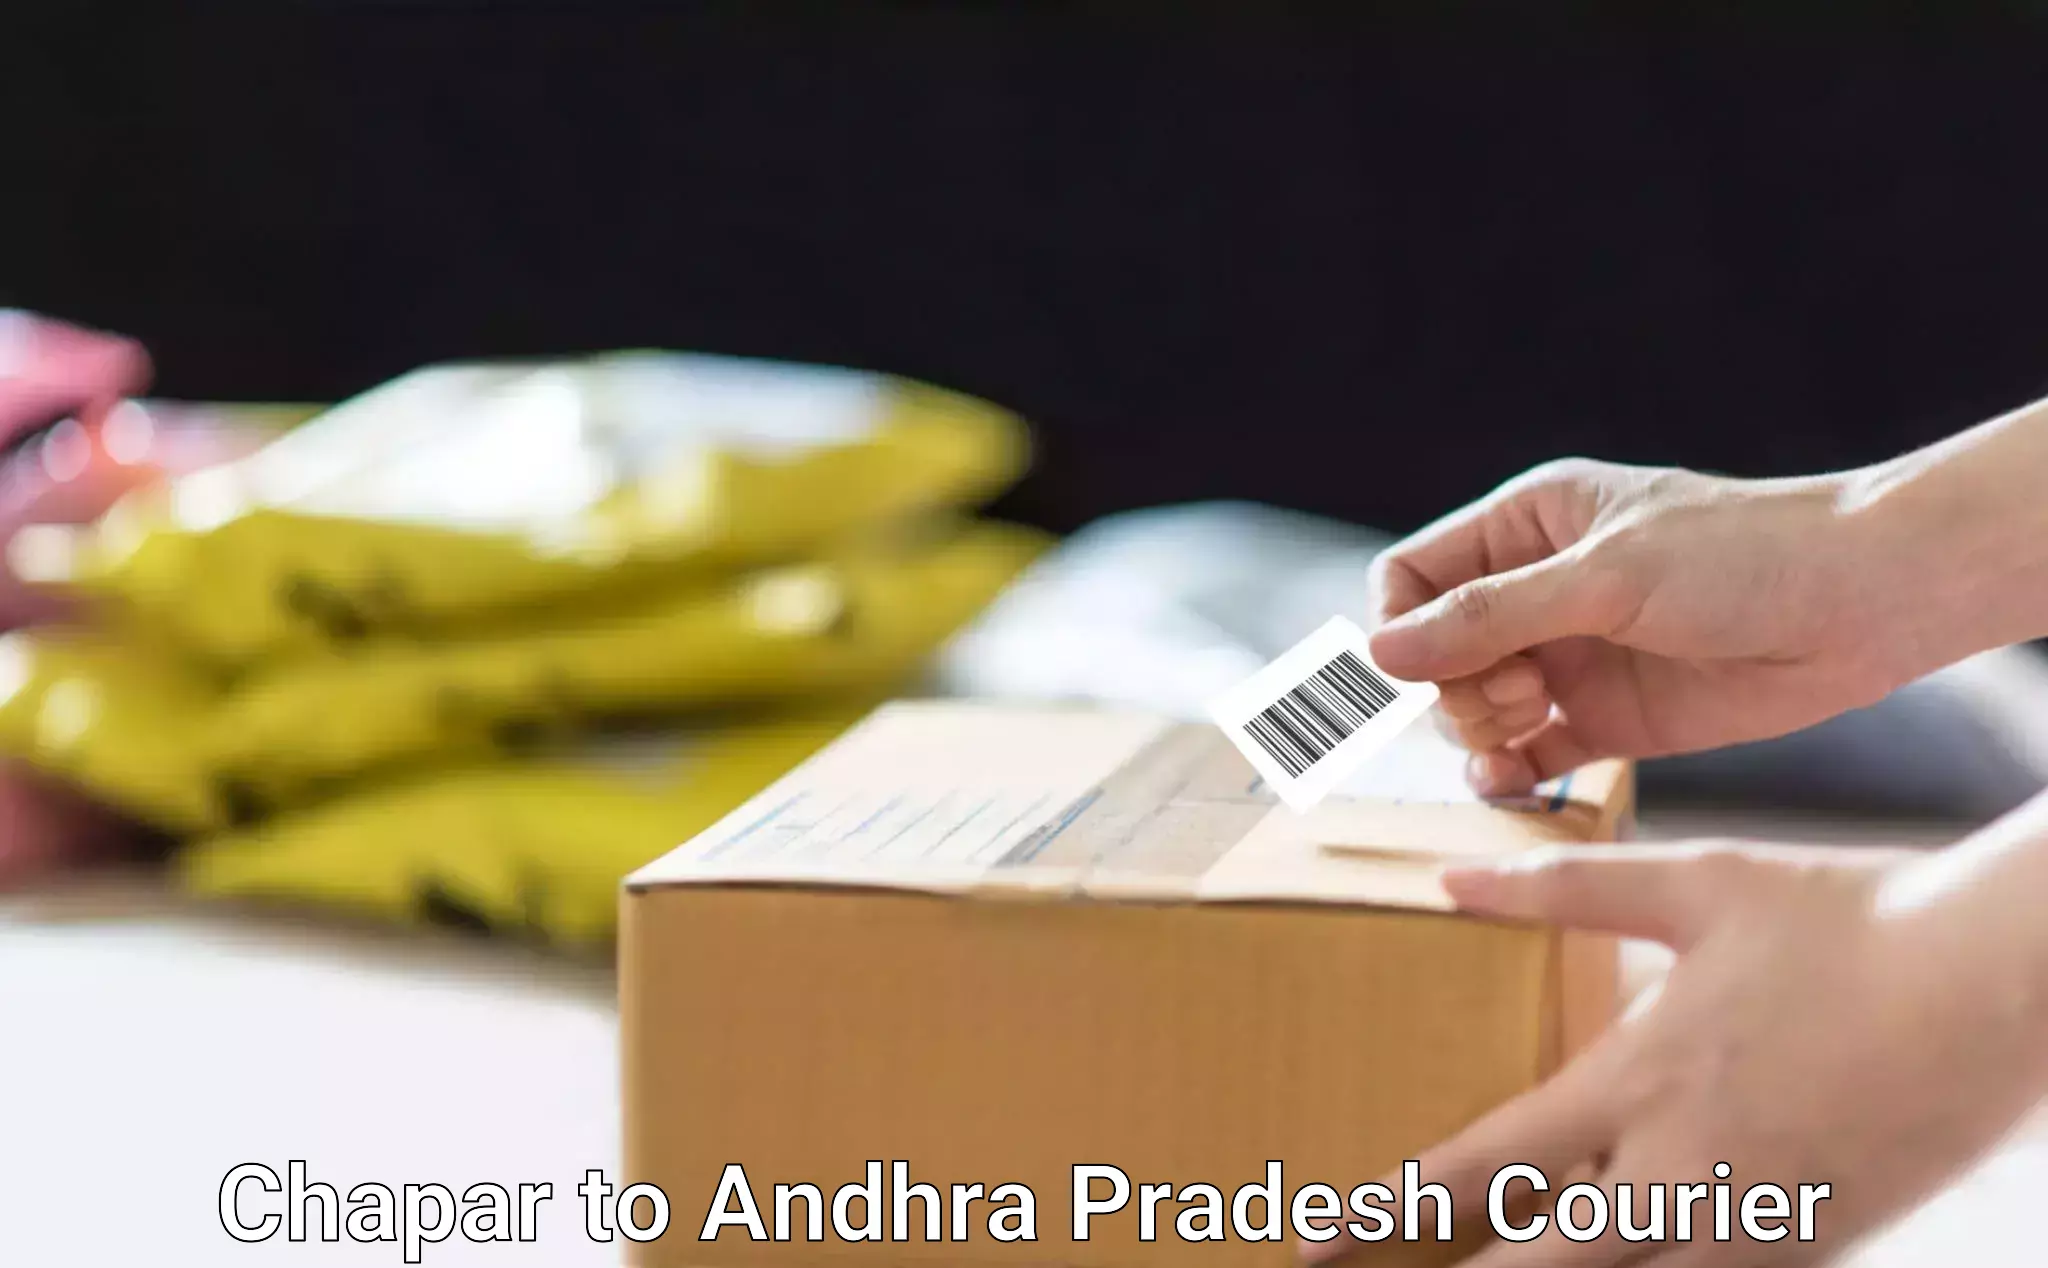 Quick booking process Chapar to Andhra Pradesh